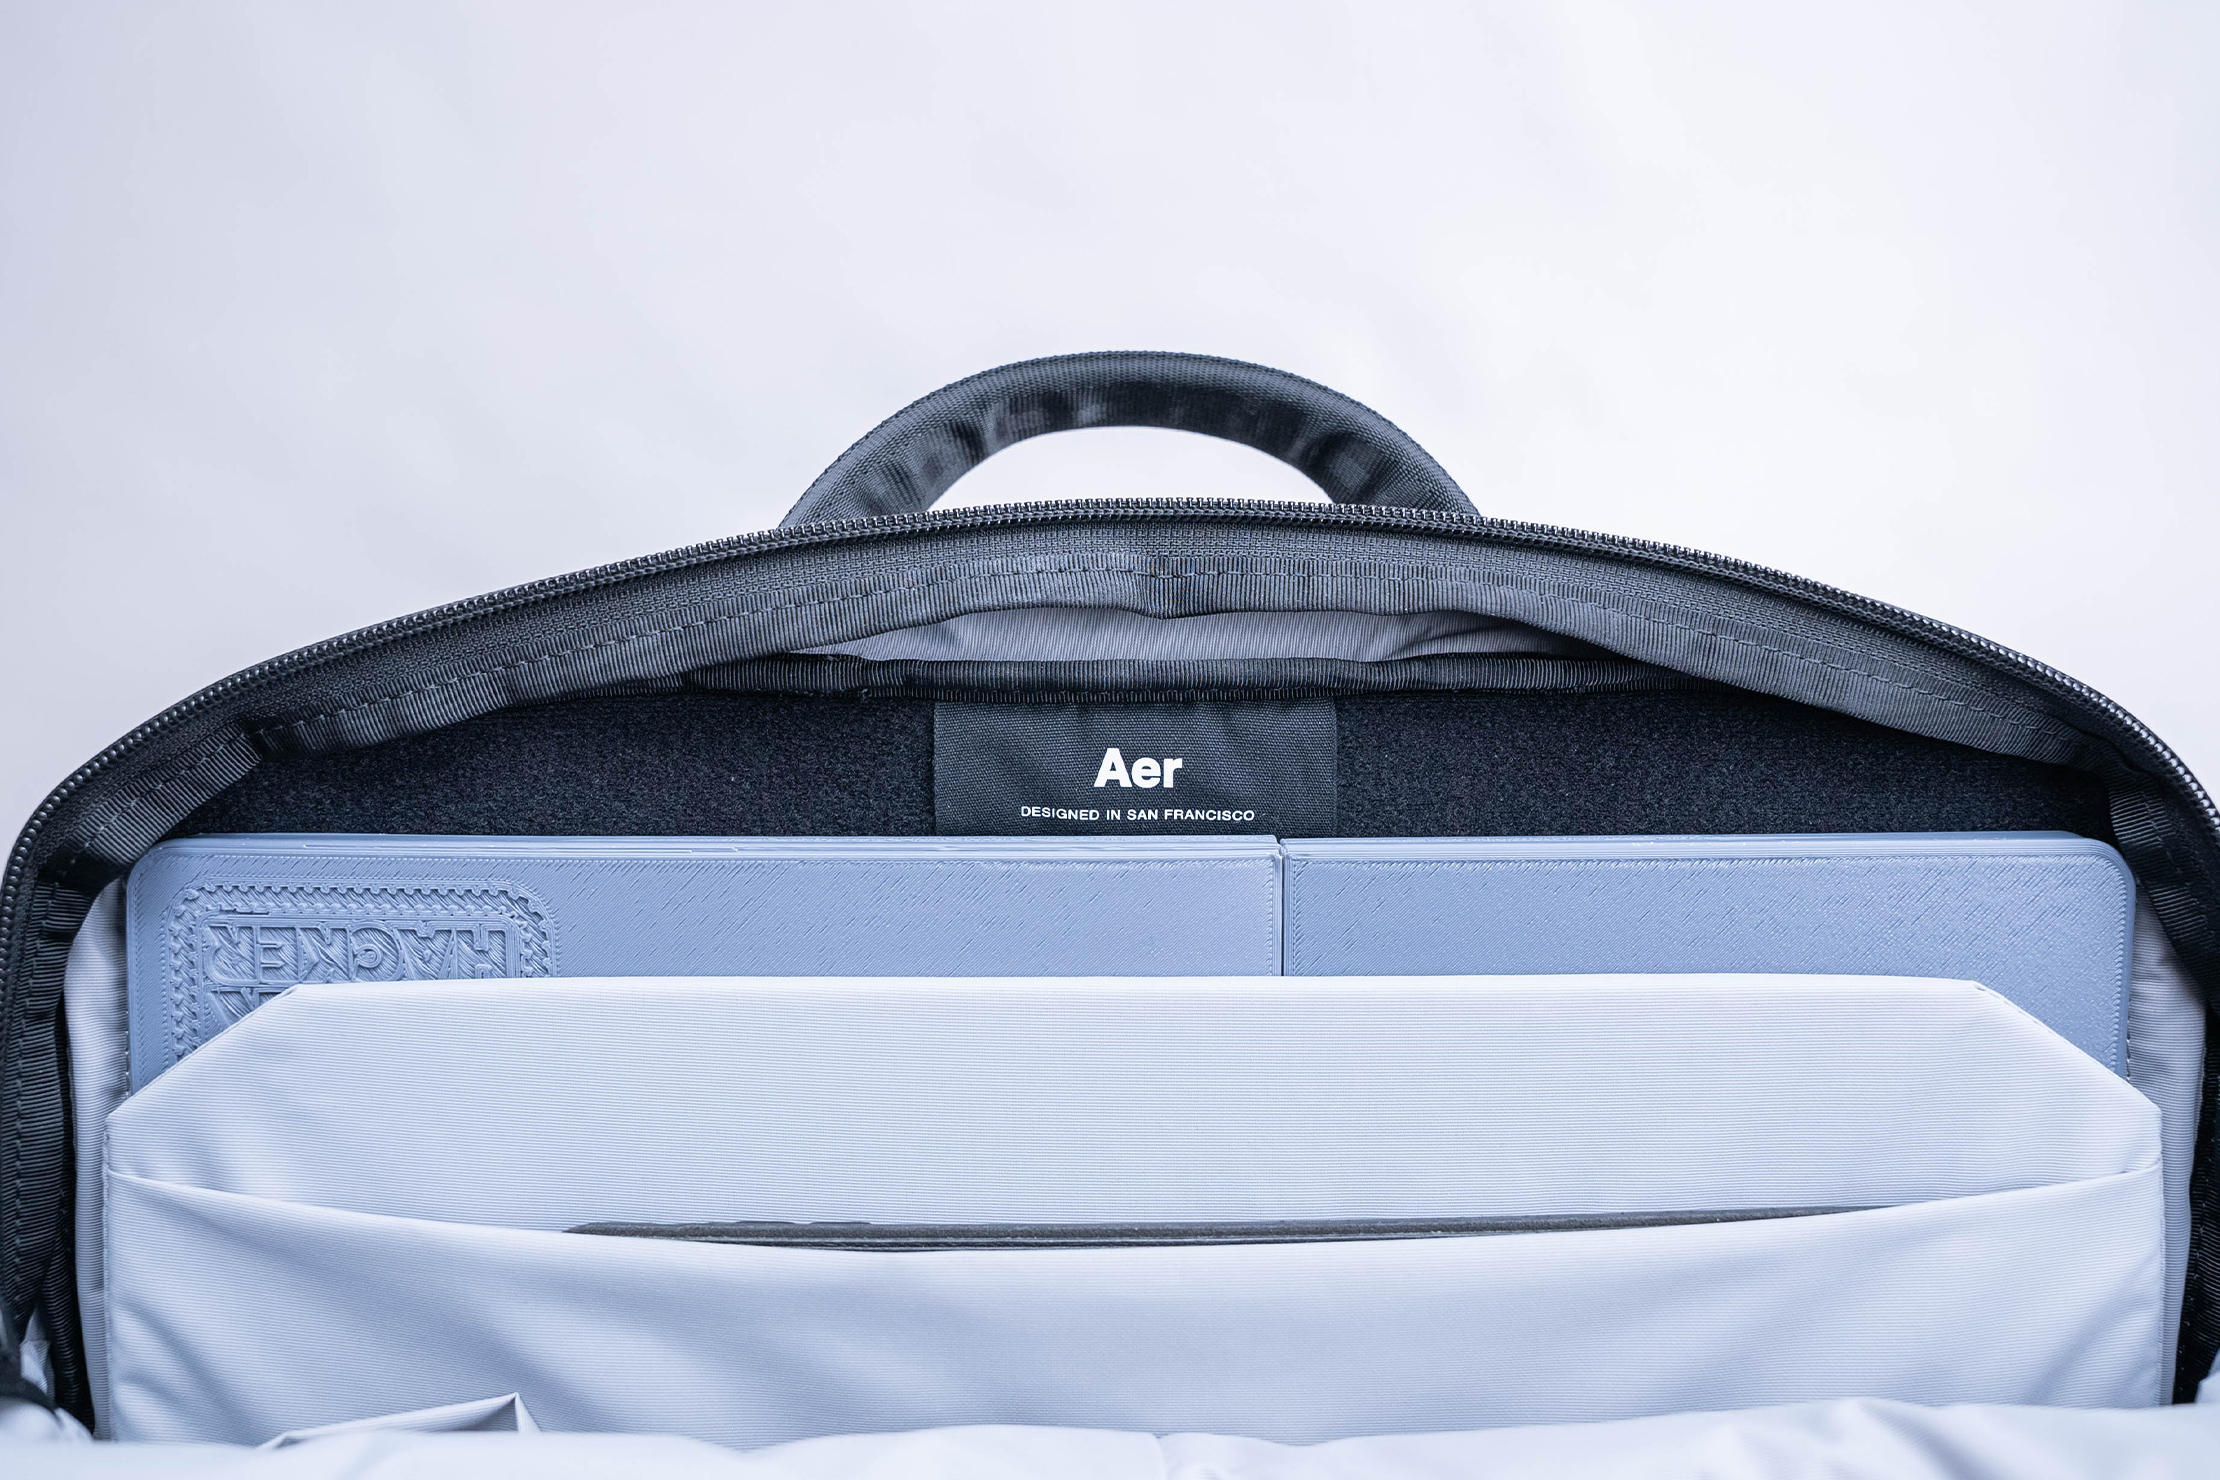 Aer Pro Brief Laptop